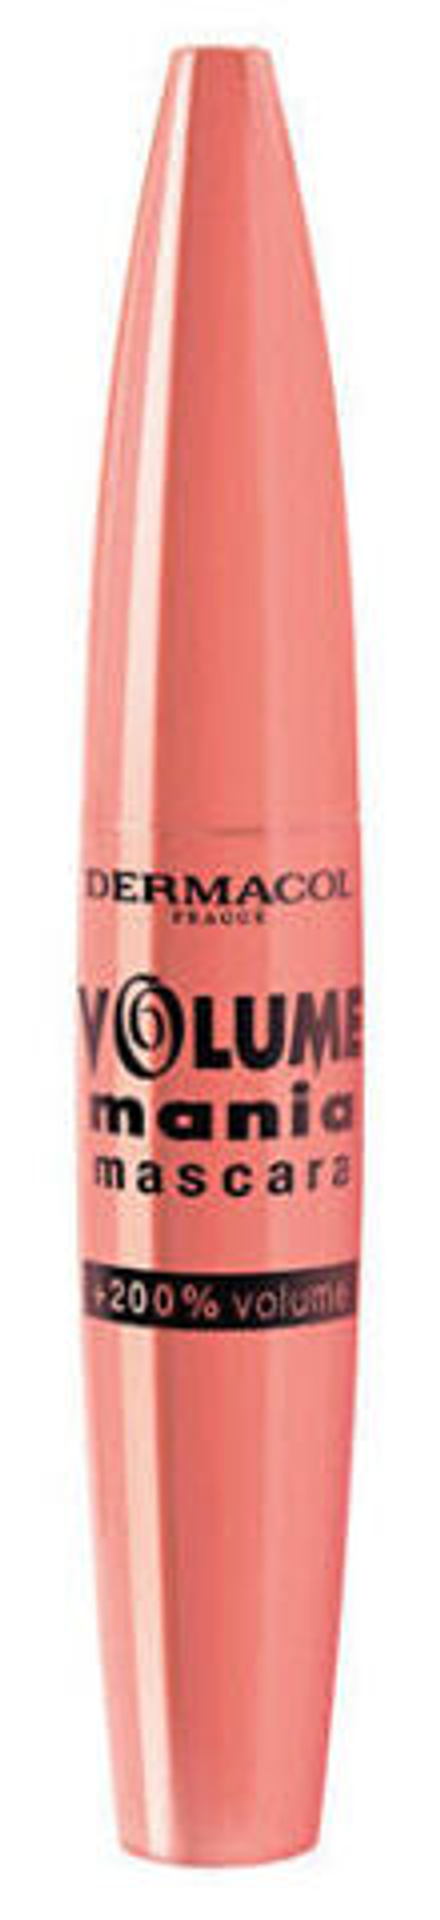 Тушь Volume Mascara Volume Mania + 200% ( Volume Mascara) 10.5 ml